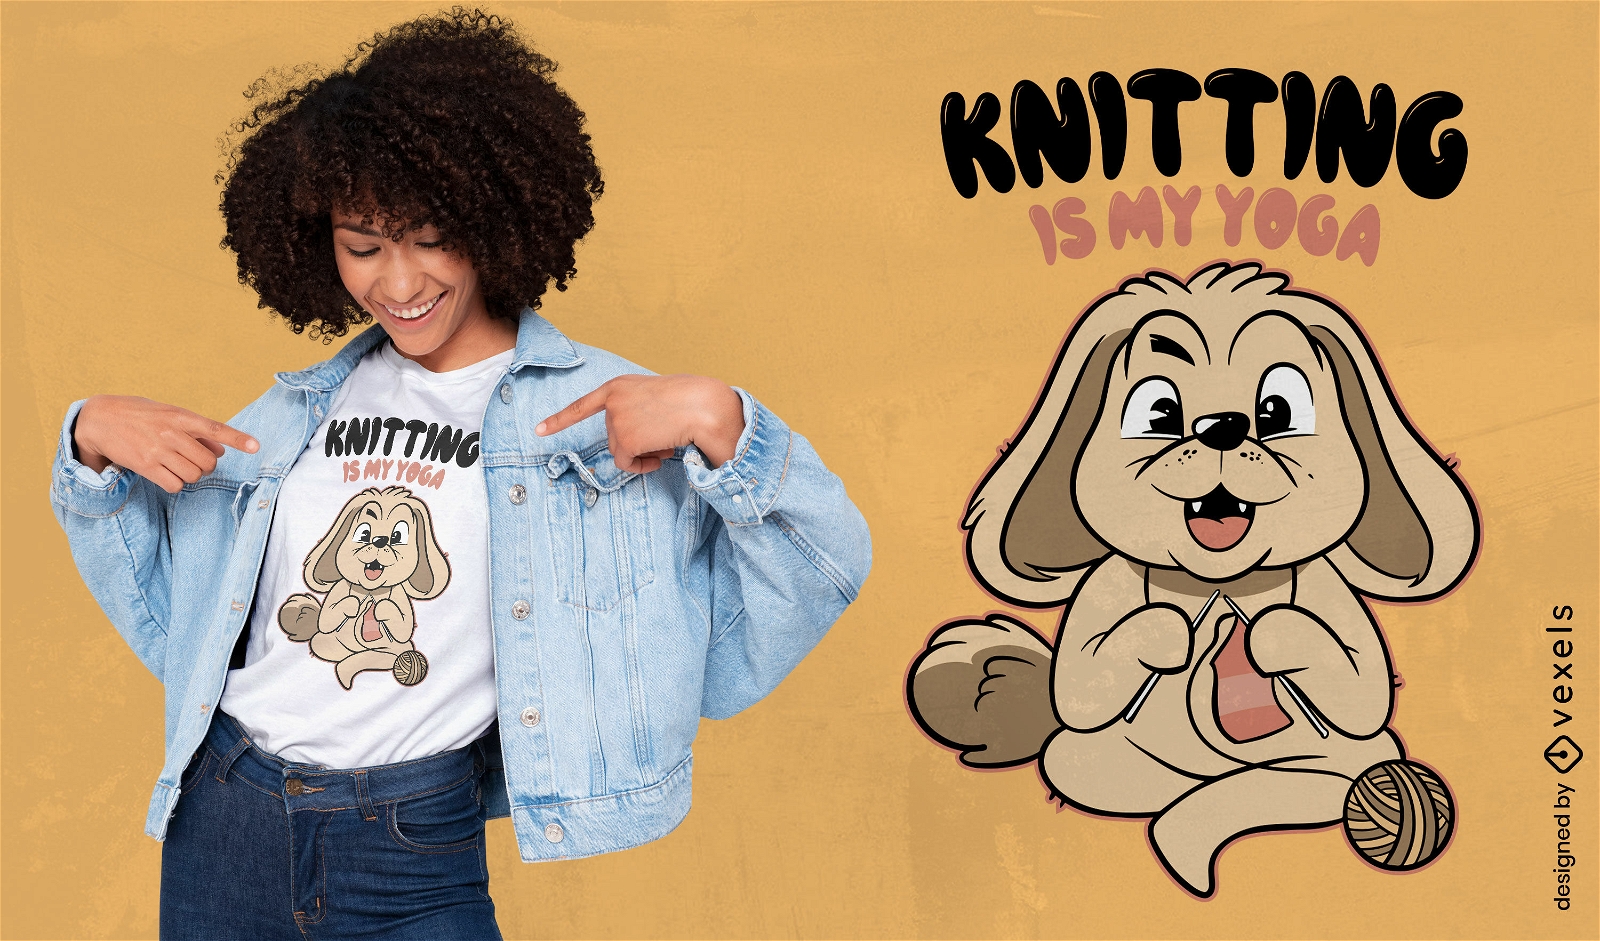 Dog knitting cartoon t-shirt design